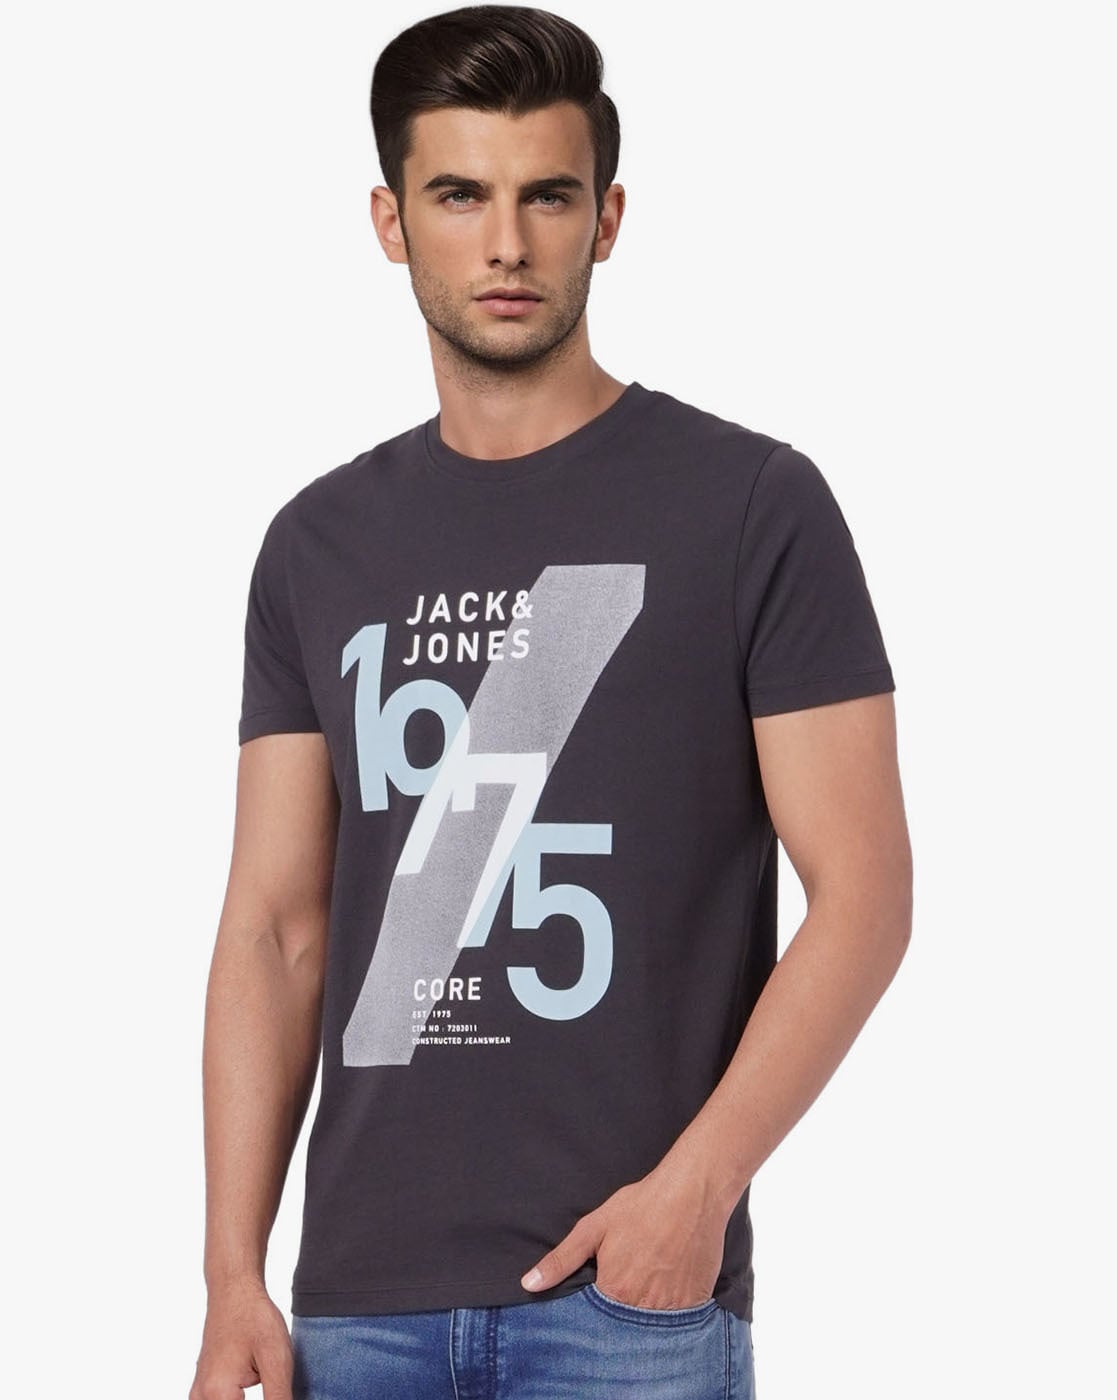 JACK & JONES Hoodies & Sweatshirts for Men for Sale | Shop Men's Athletic  Clothes | eBay